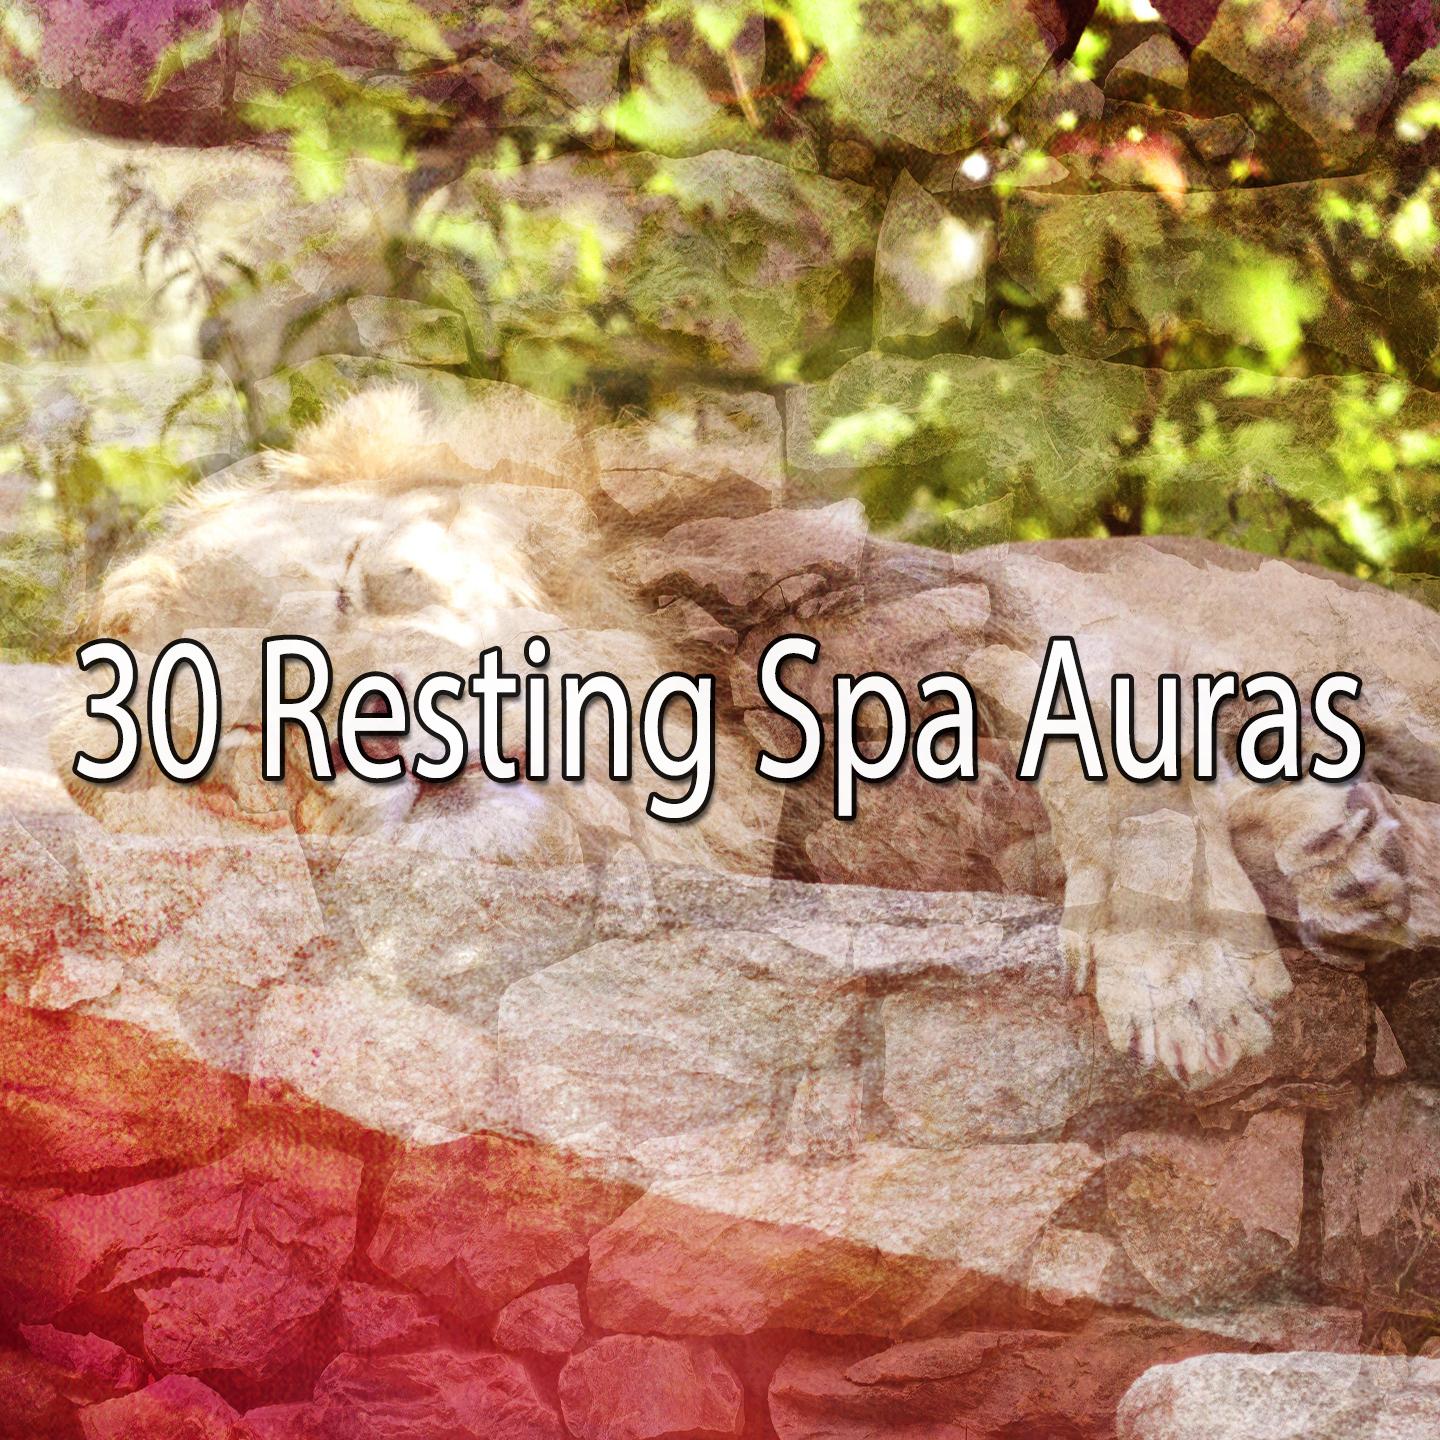 30 Resting Spa Auras